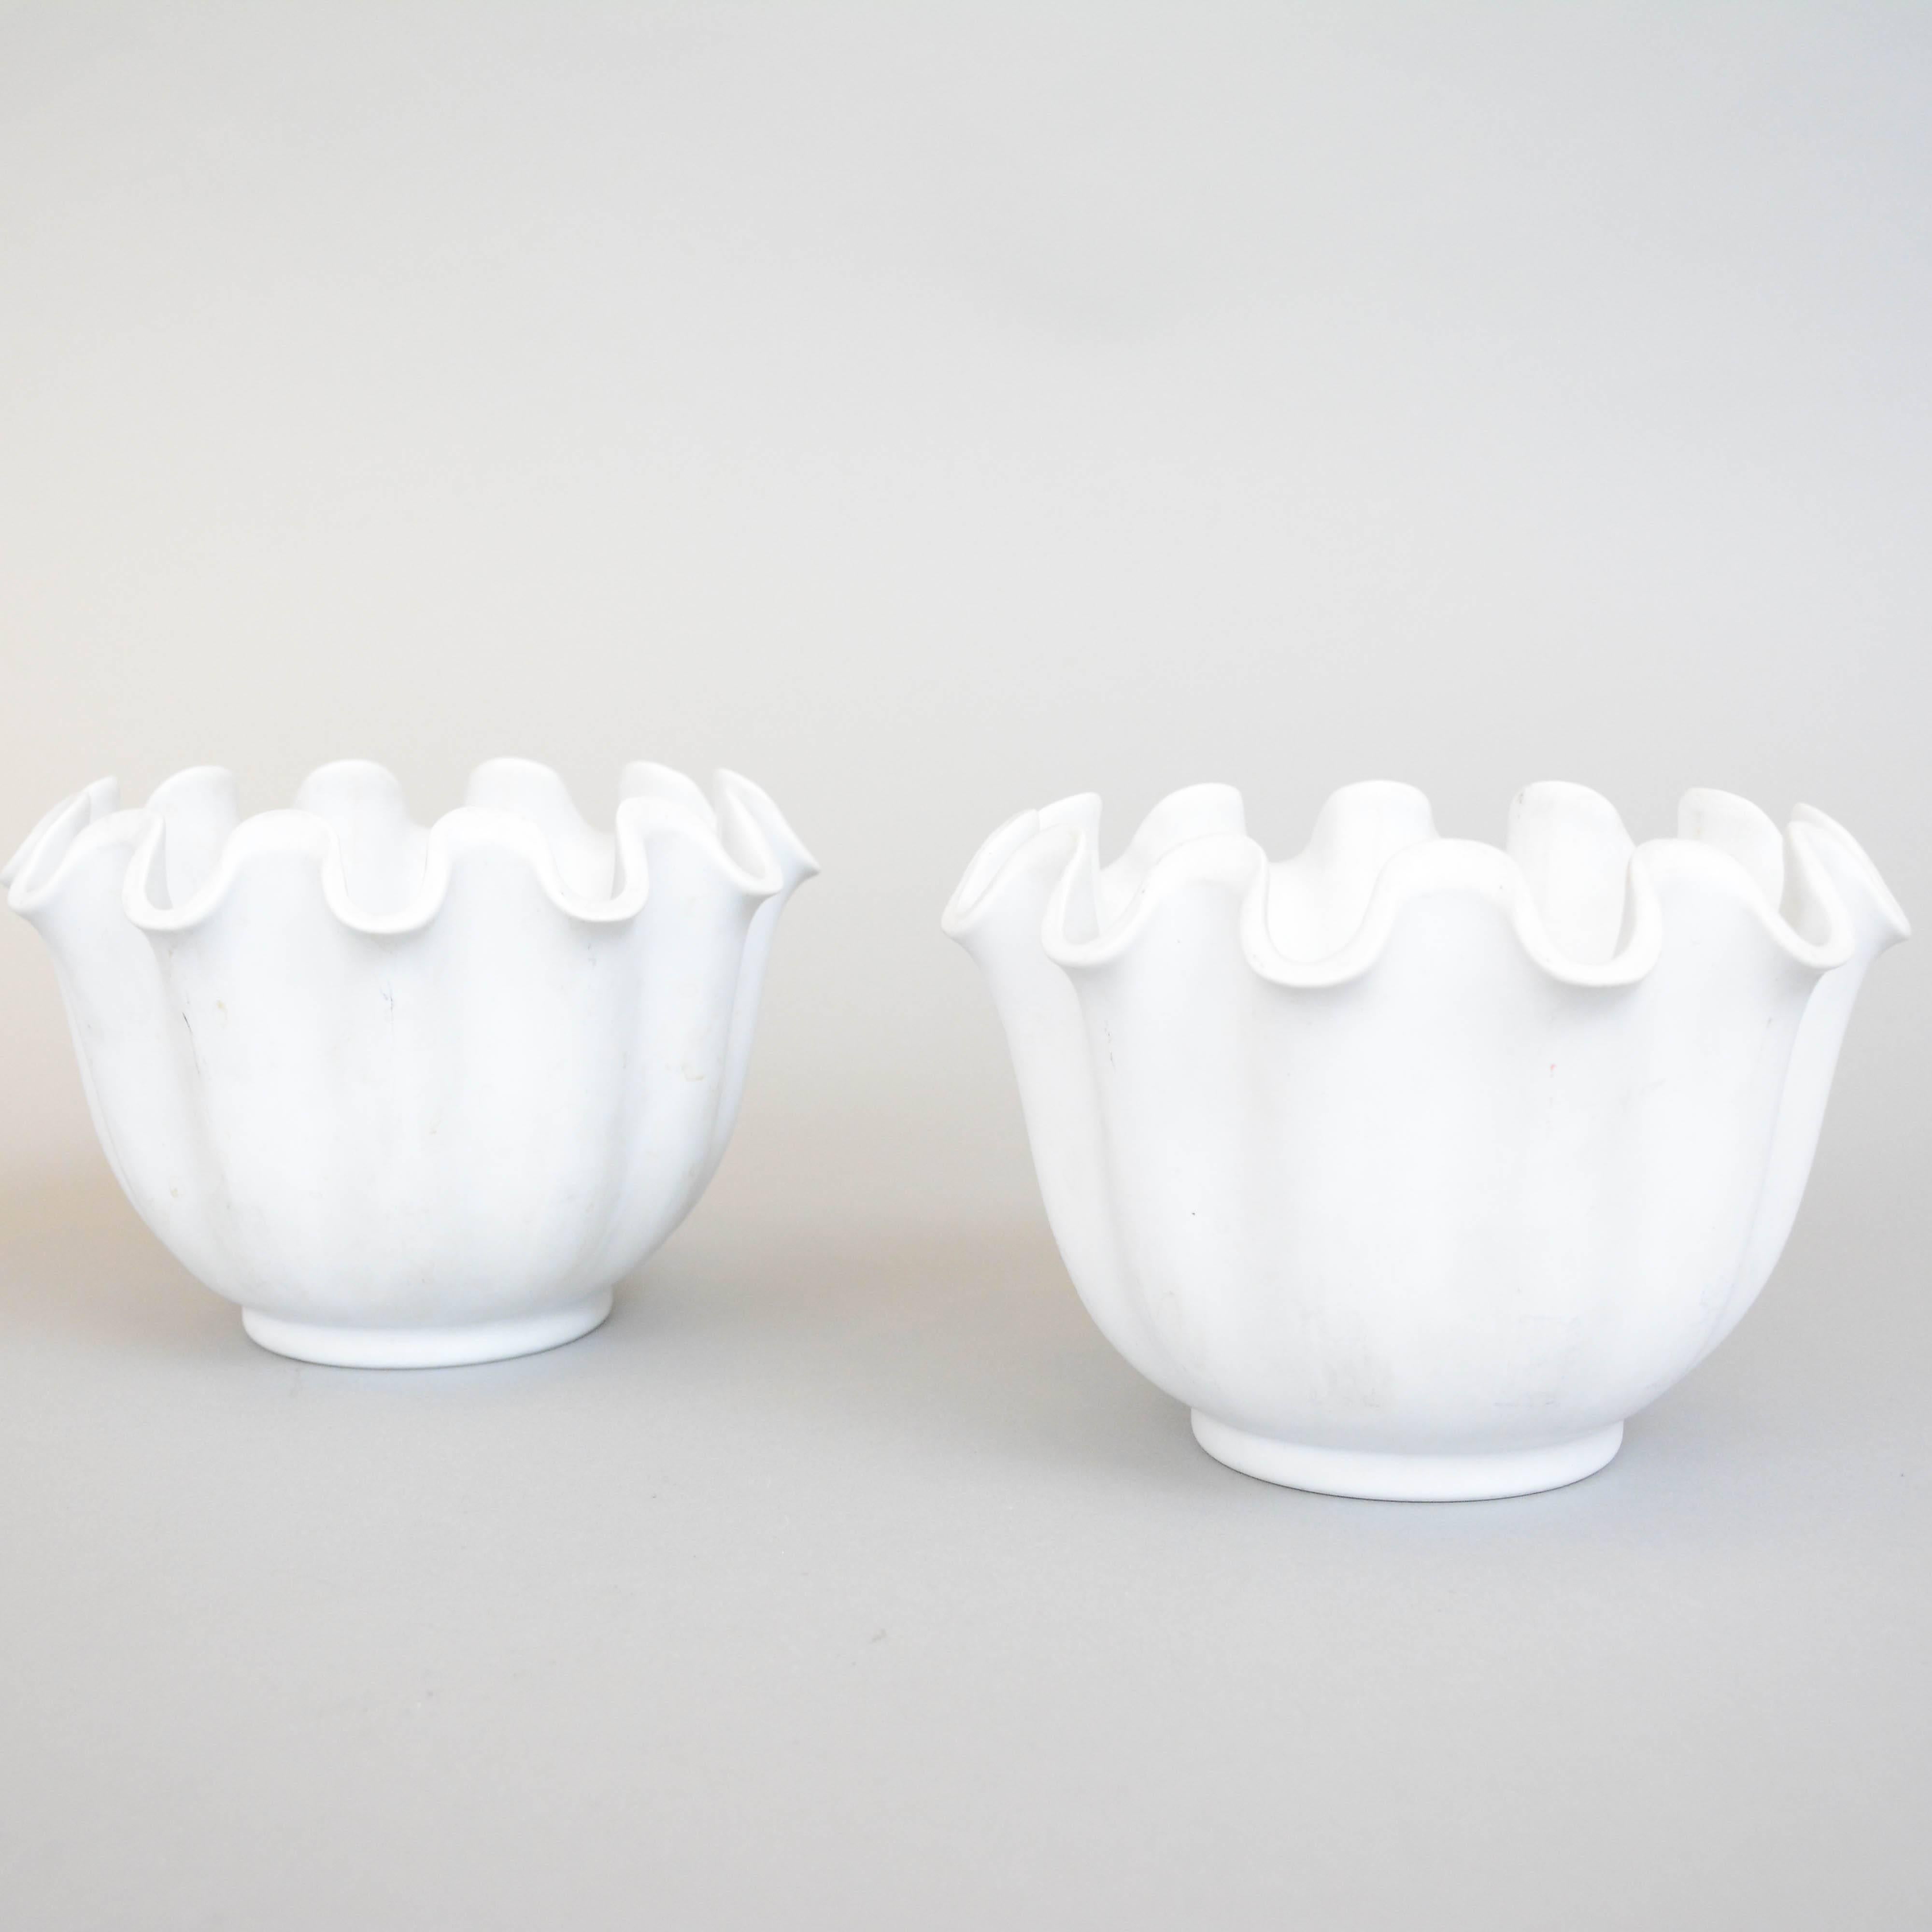 Vaga, a pair of bowls, by Wilhelm Kage for Gustavsberg, Sweden, 1940s-1950s. White carrara glaze.